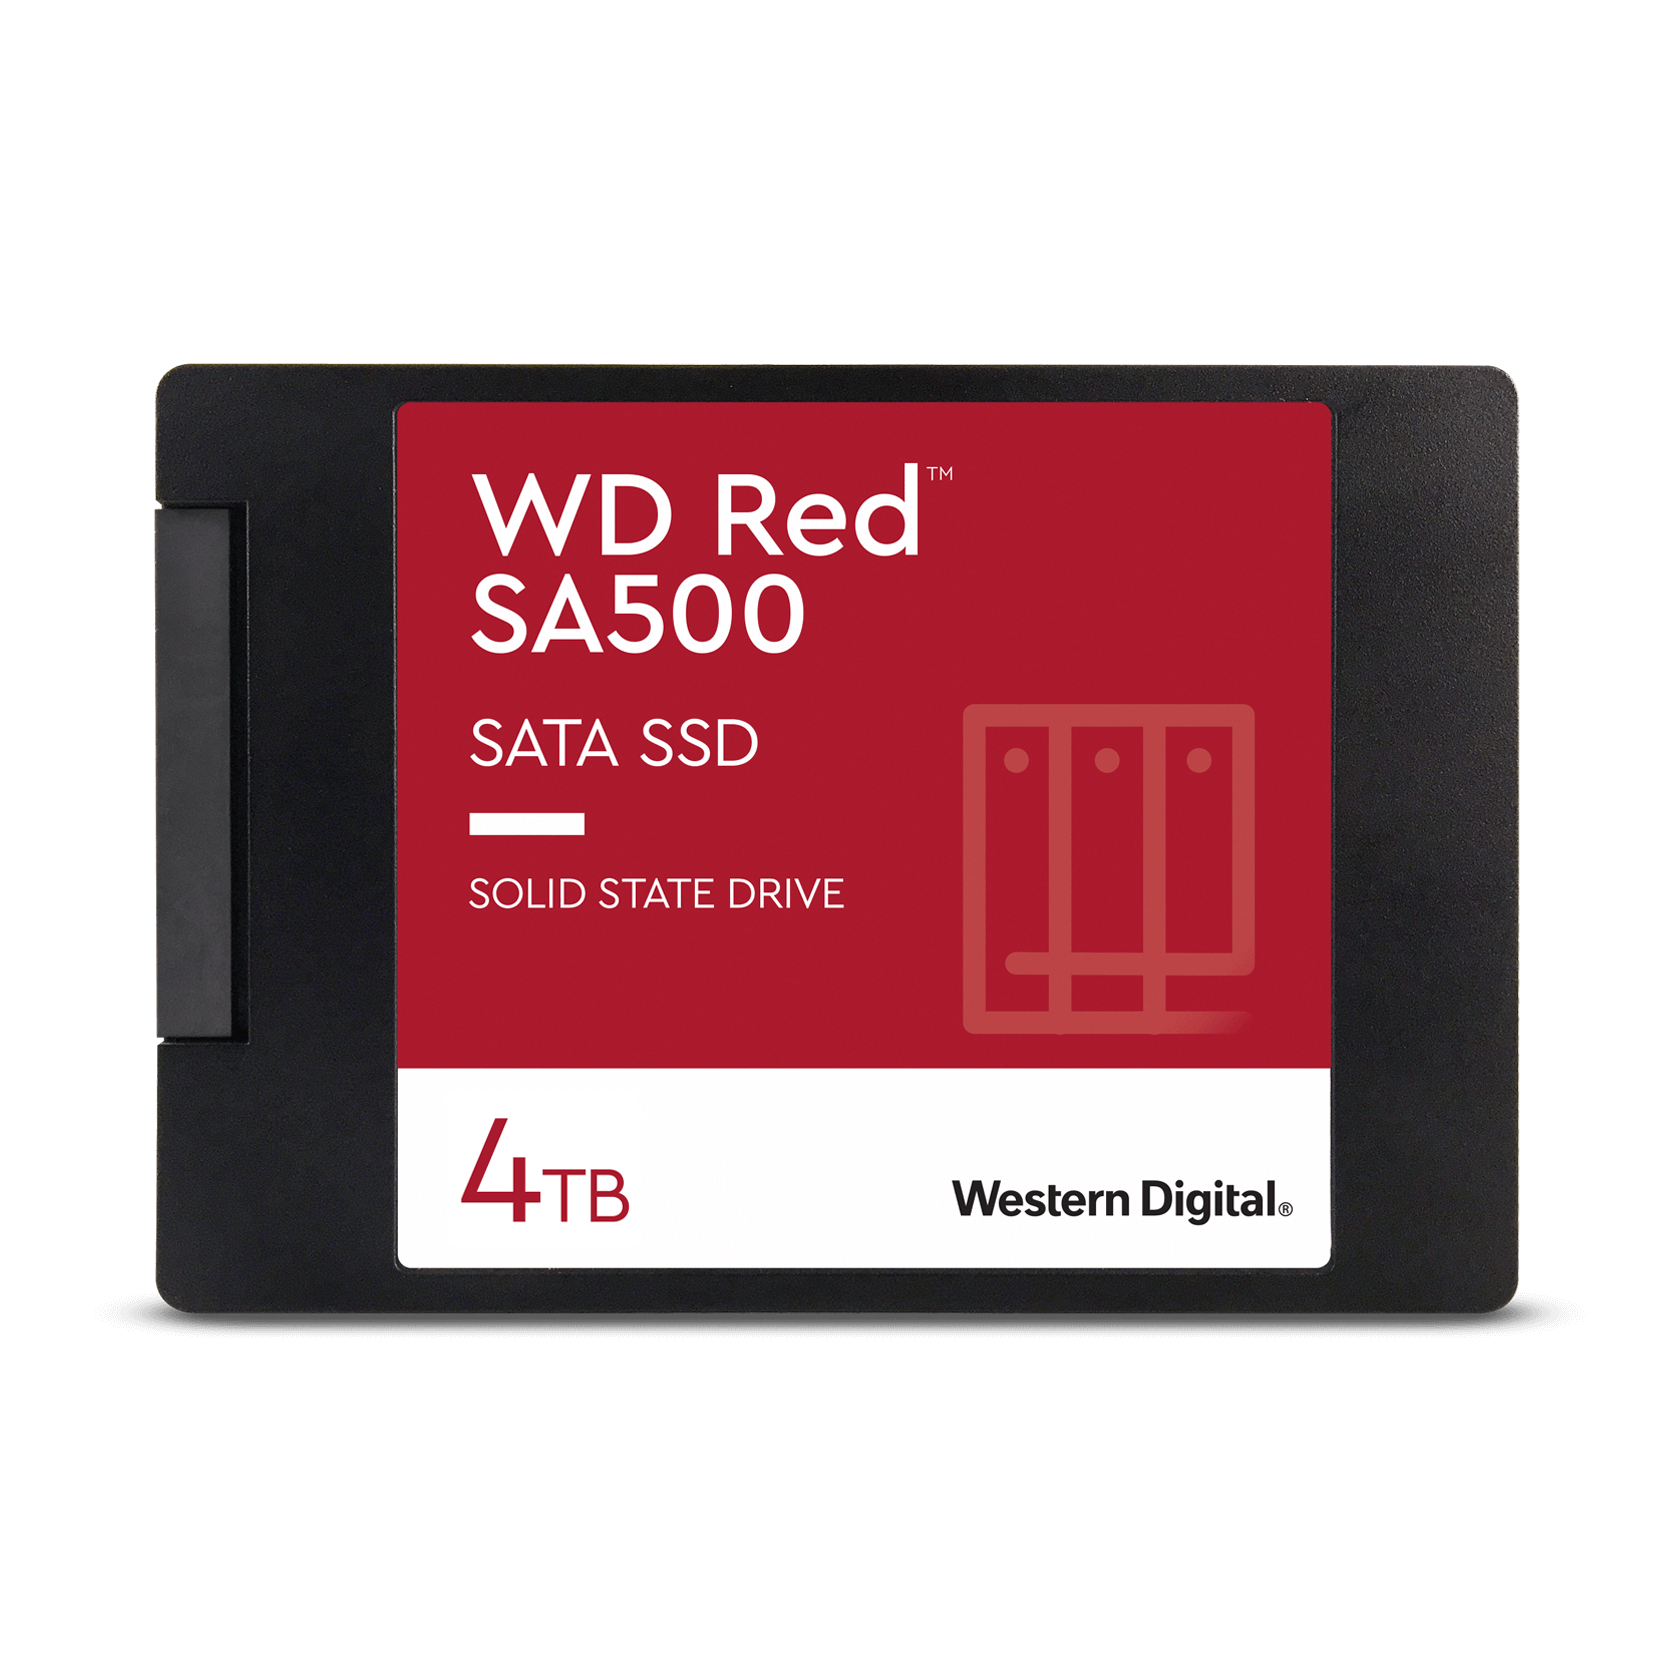 Western Digital 4TB WD SA500 NAS SATA, Red Network Attached Storage - WDS400T1R0A